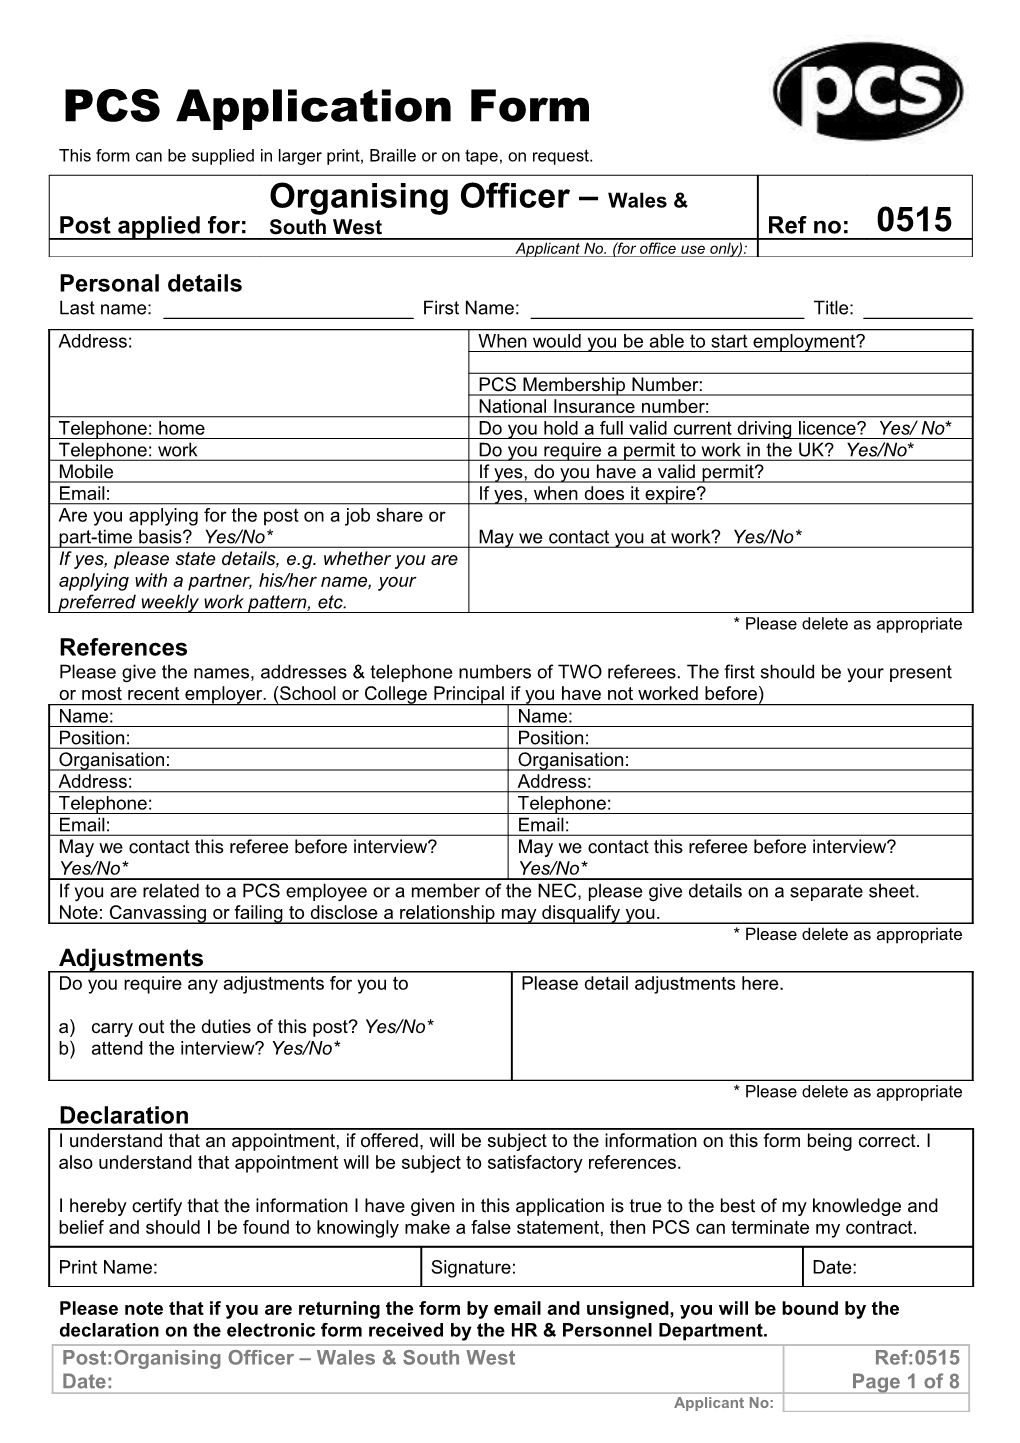 PCS Application Form